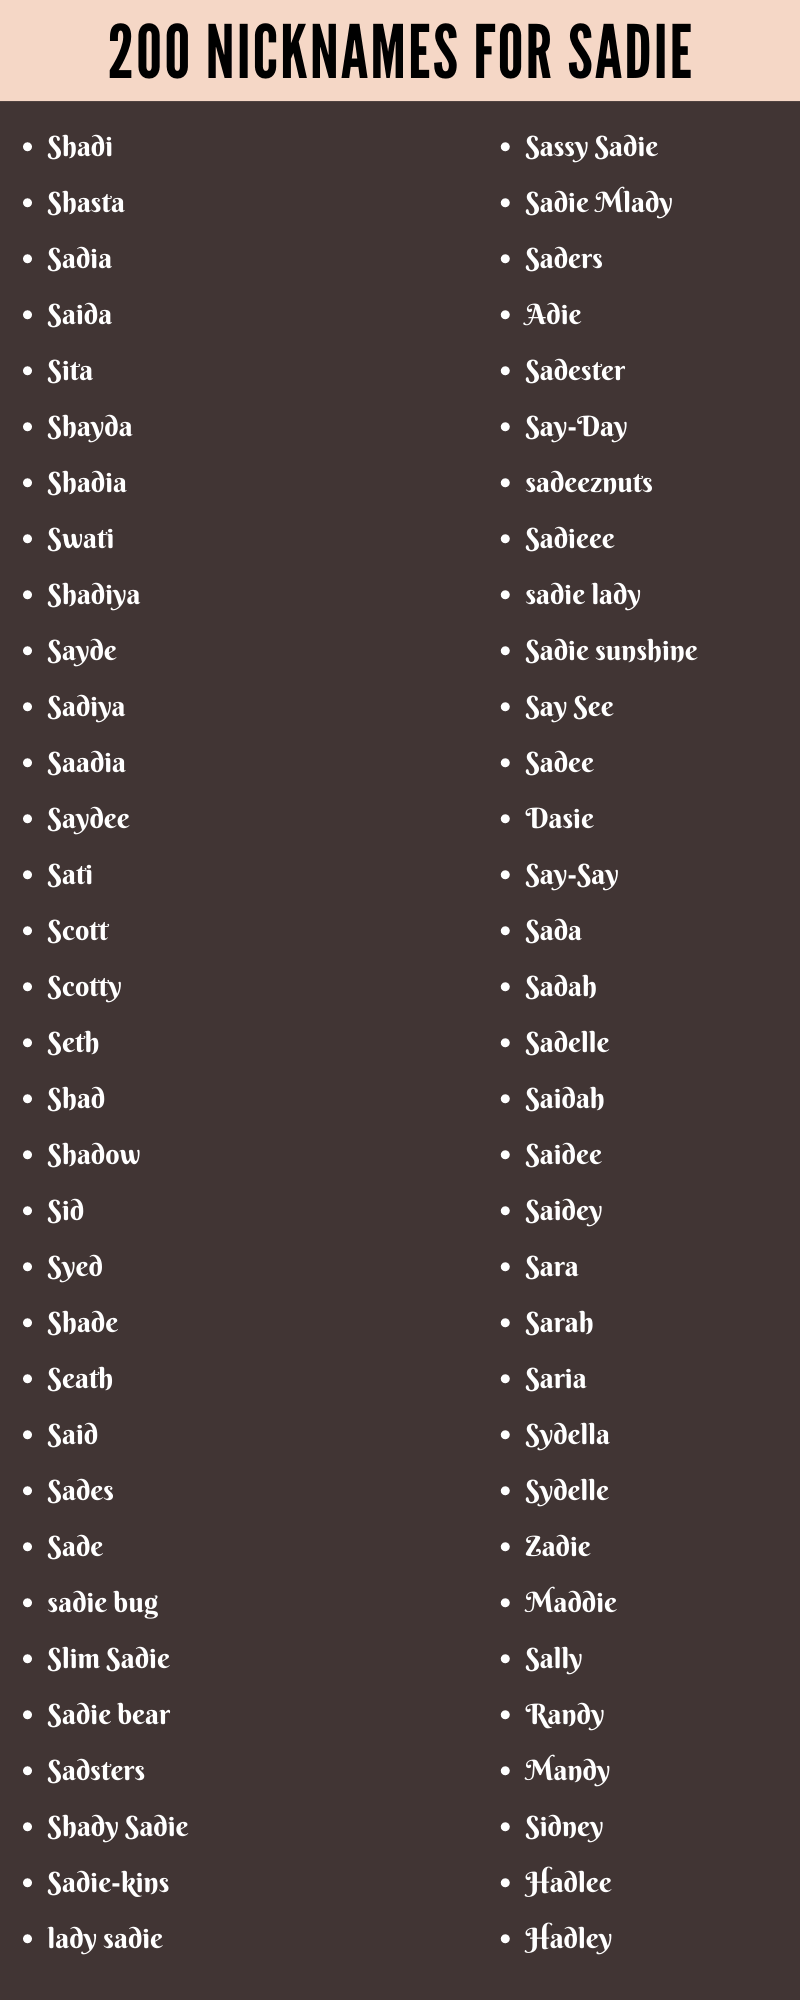 Nicknames For Sadie